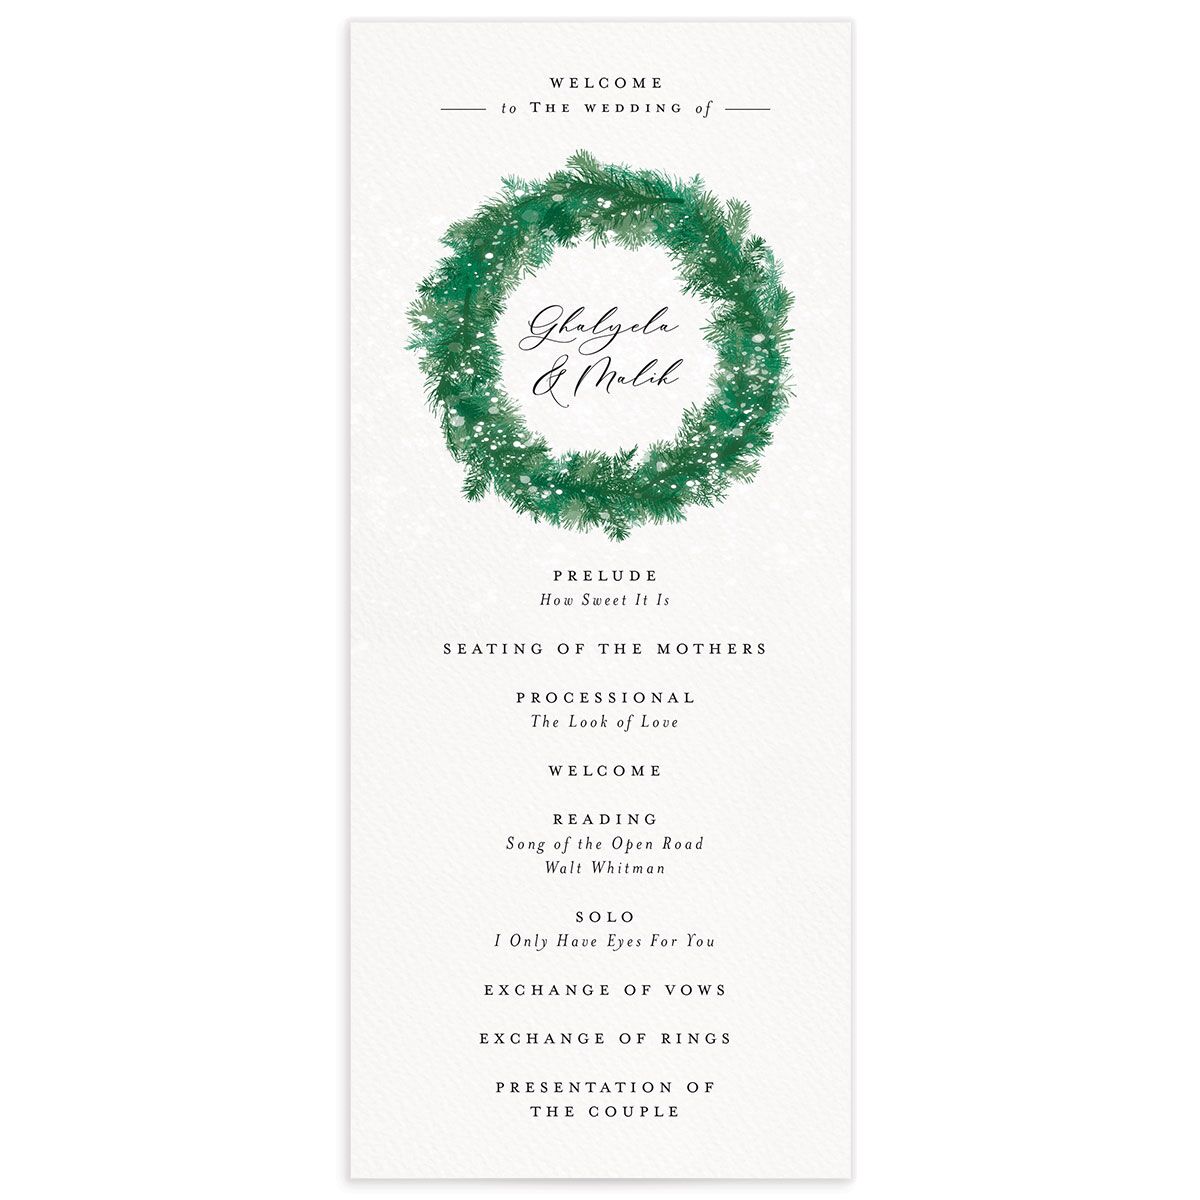 Snowy Wreath Wedding Programs front in green